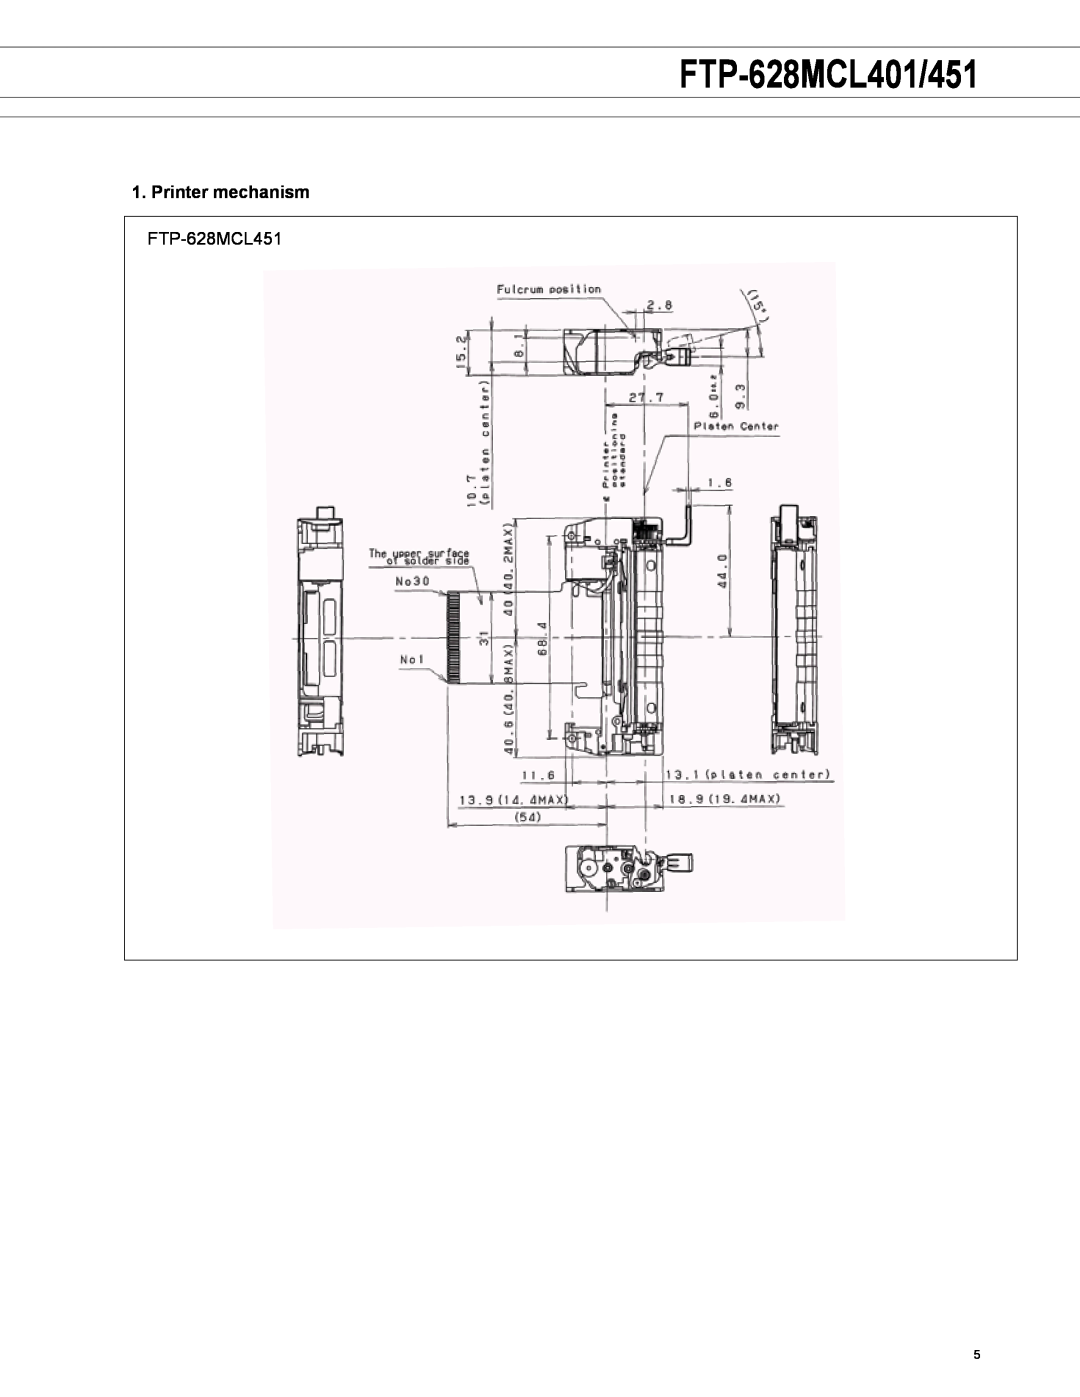 Fujitsu manual FTP-628MCL401/451, Printer mechanism, FTP-628MCL451 